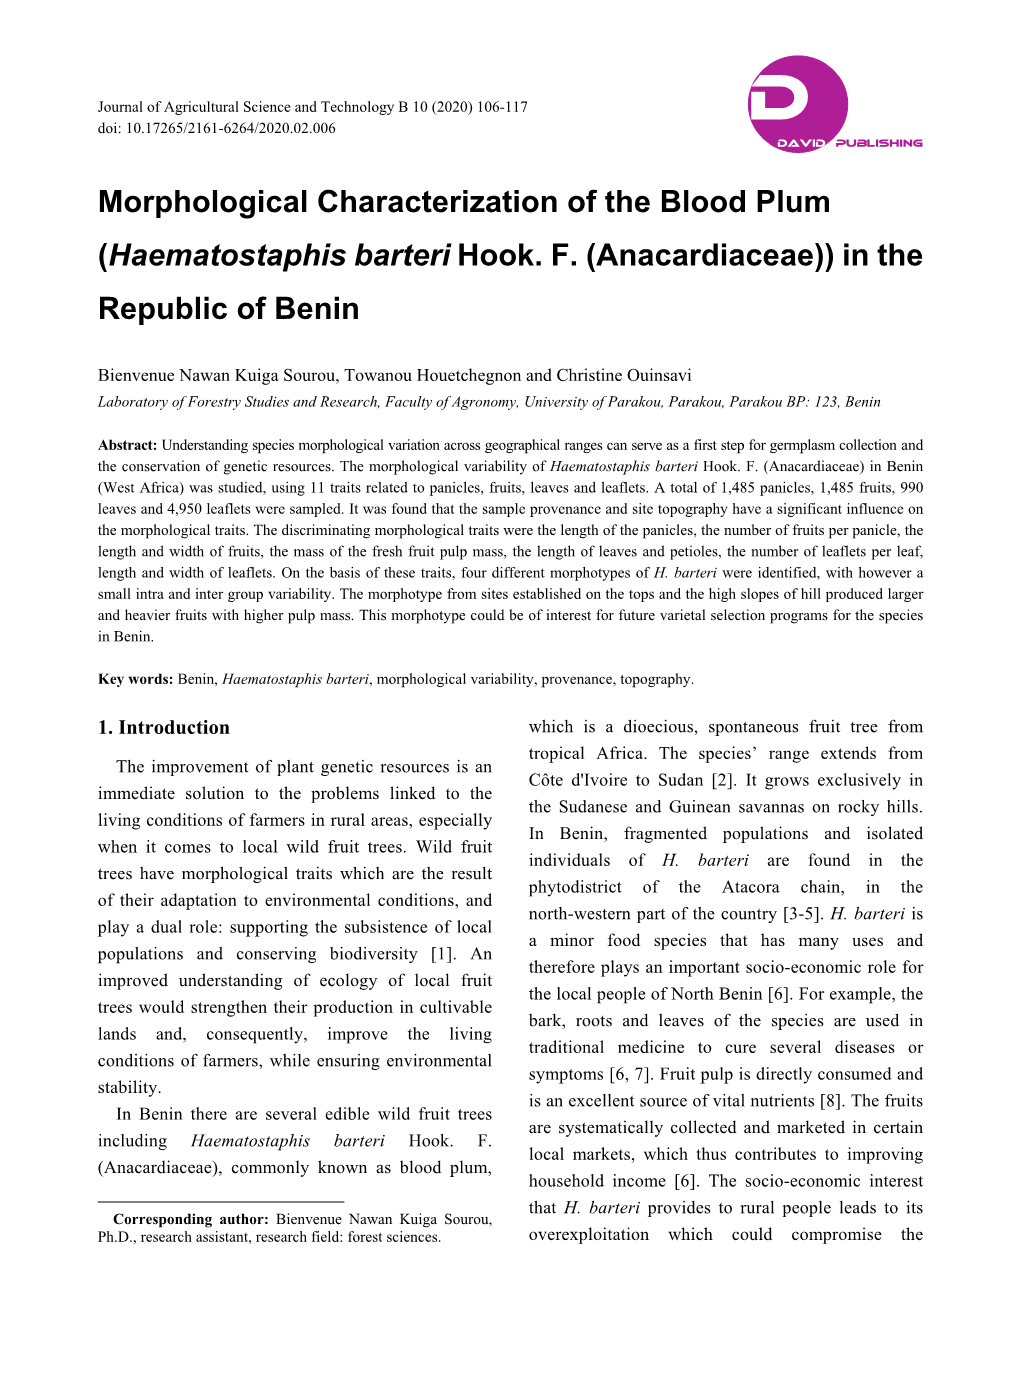 Morphological Characterization of the Blood Plum (Haematostaphis Barteri Hook